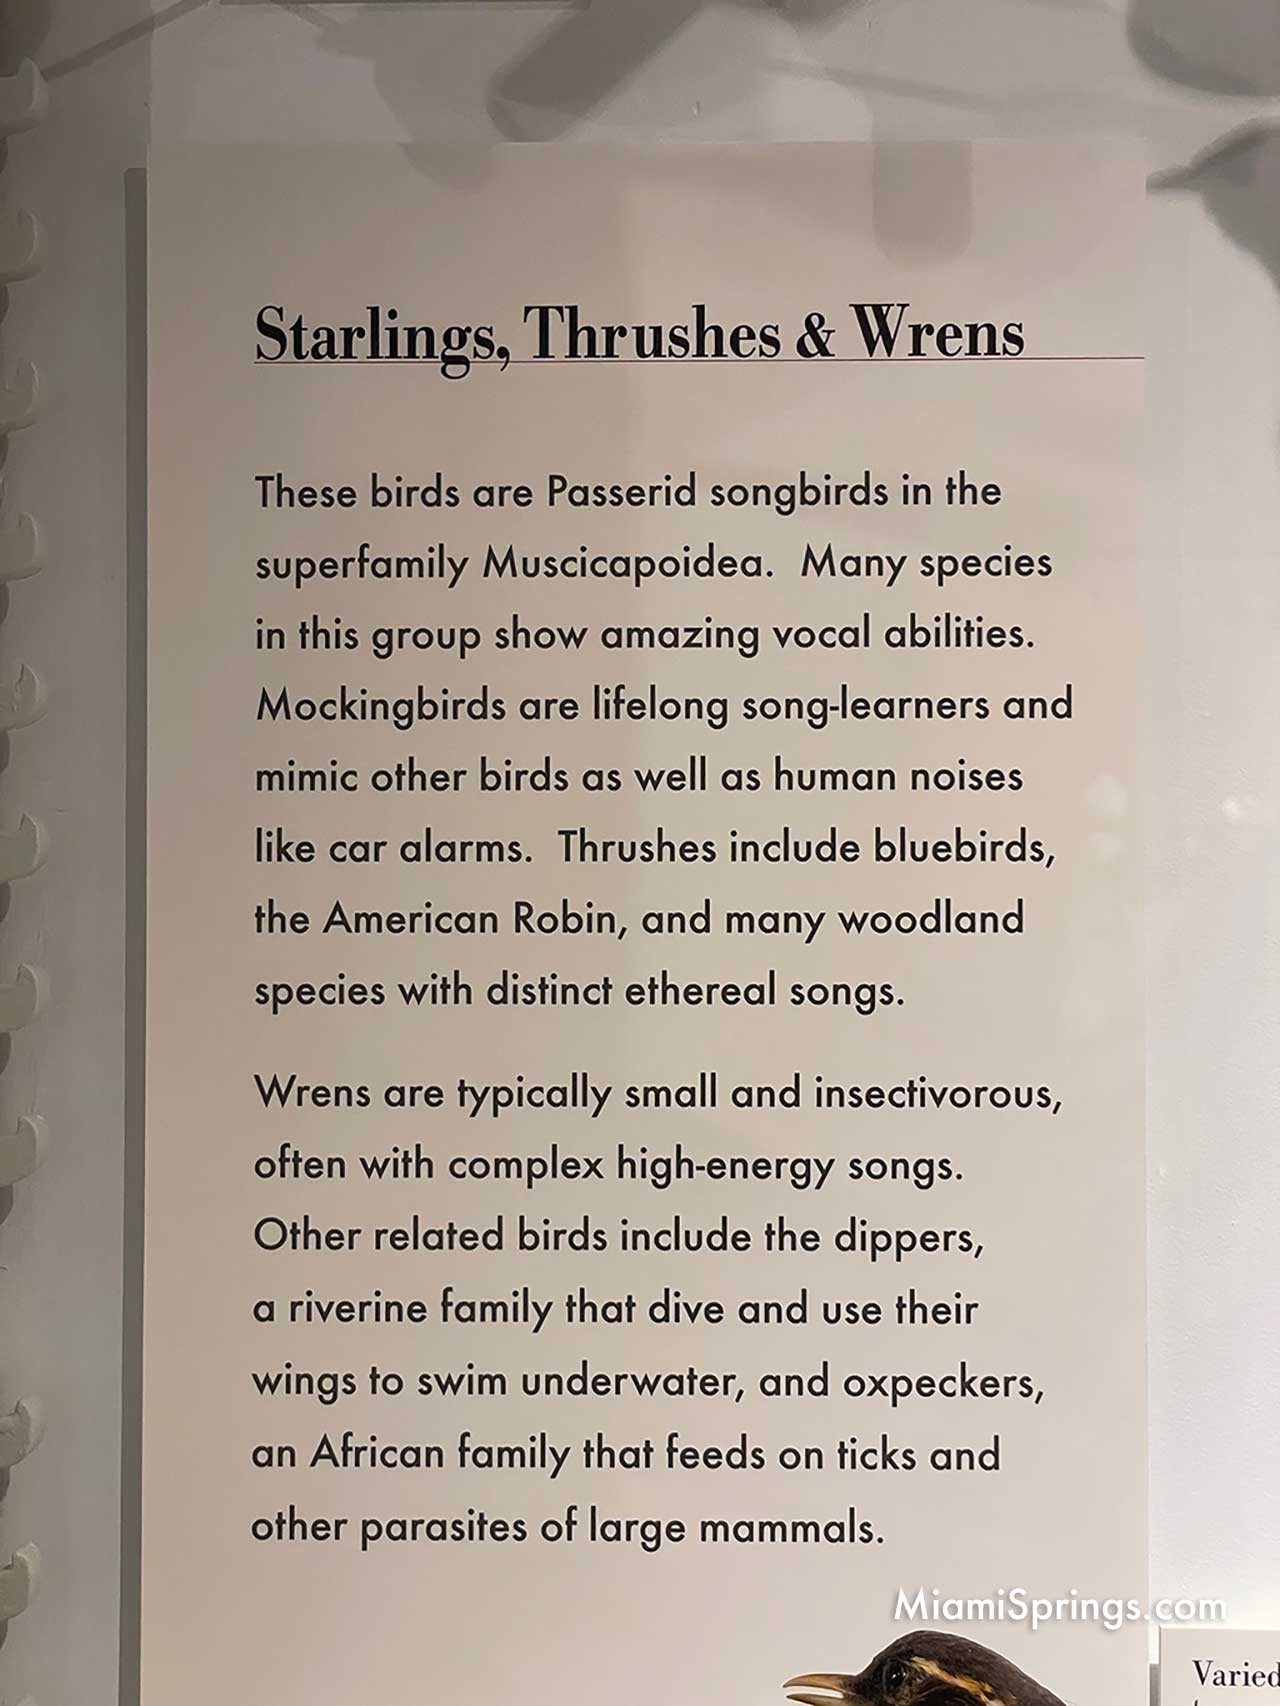 Wrens displayed at the Harvard Museum of Natural History